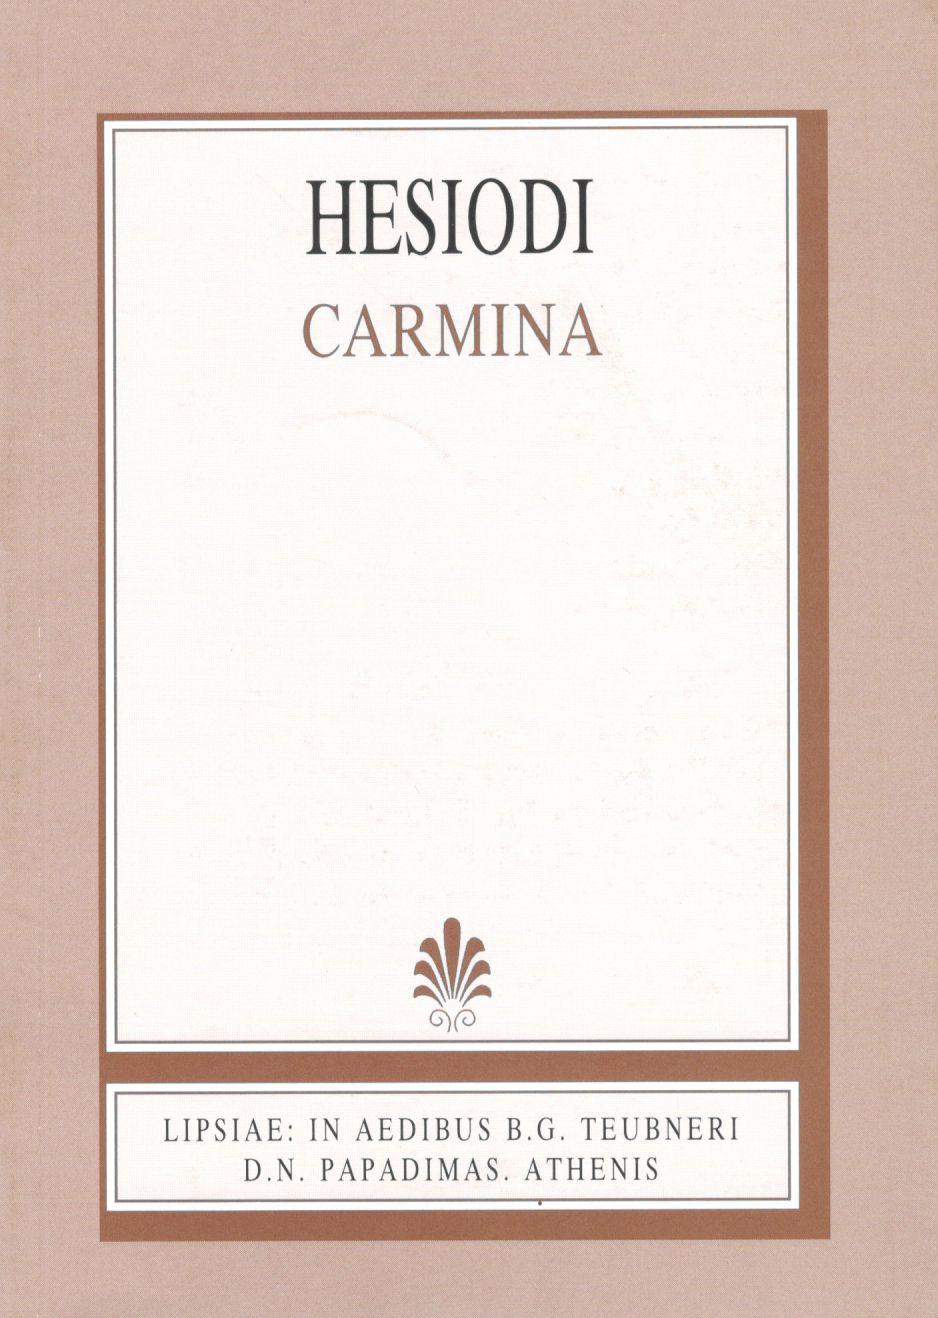 Hesiodi, Carmina [Ησιόδου, 'Ασματα]